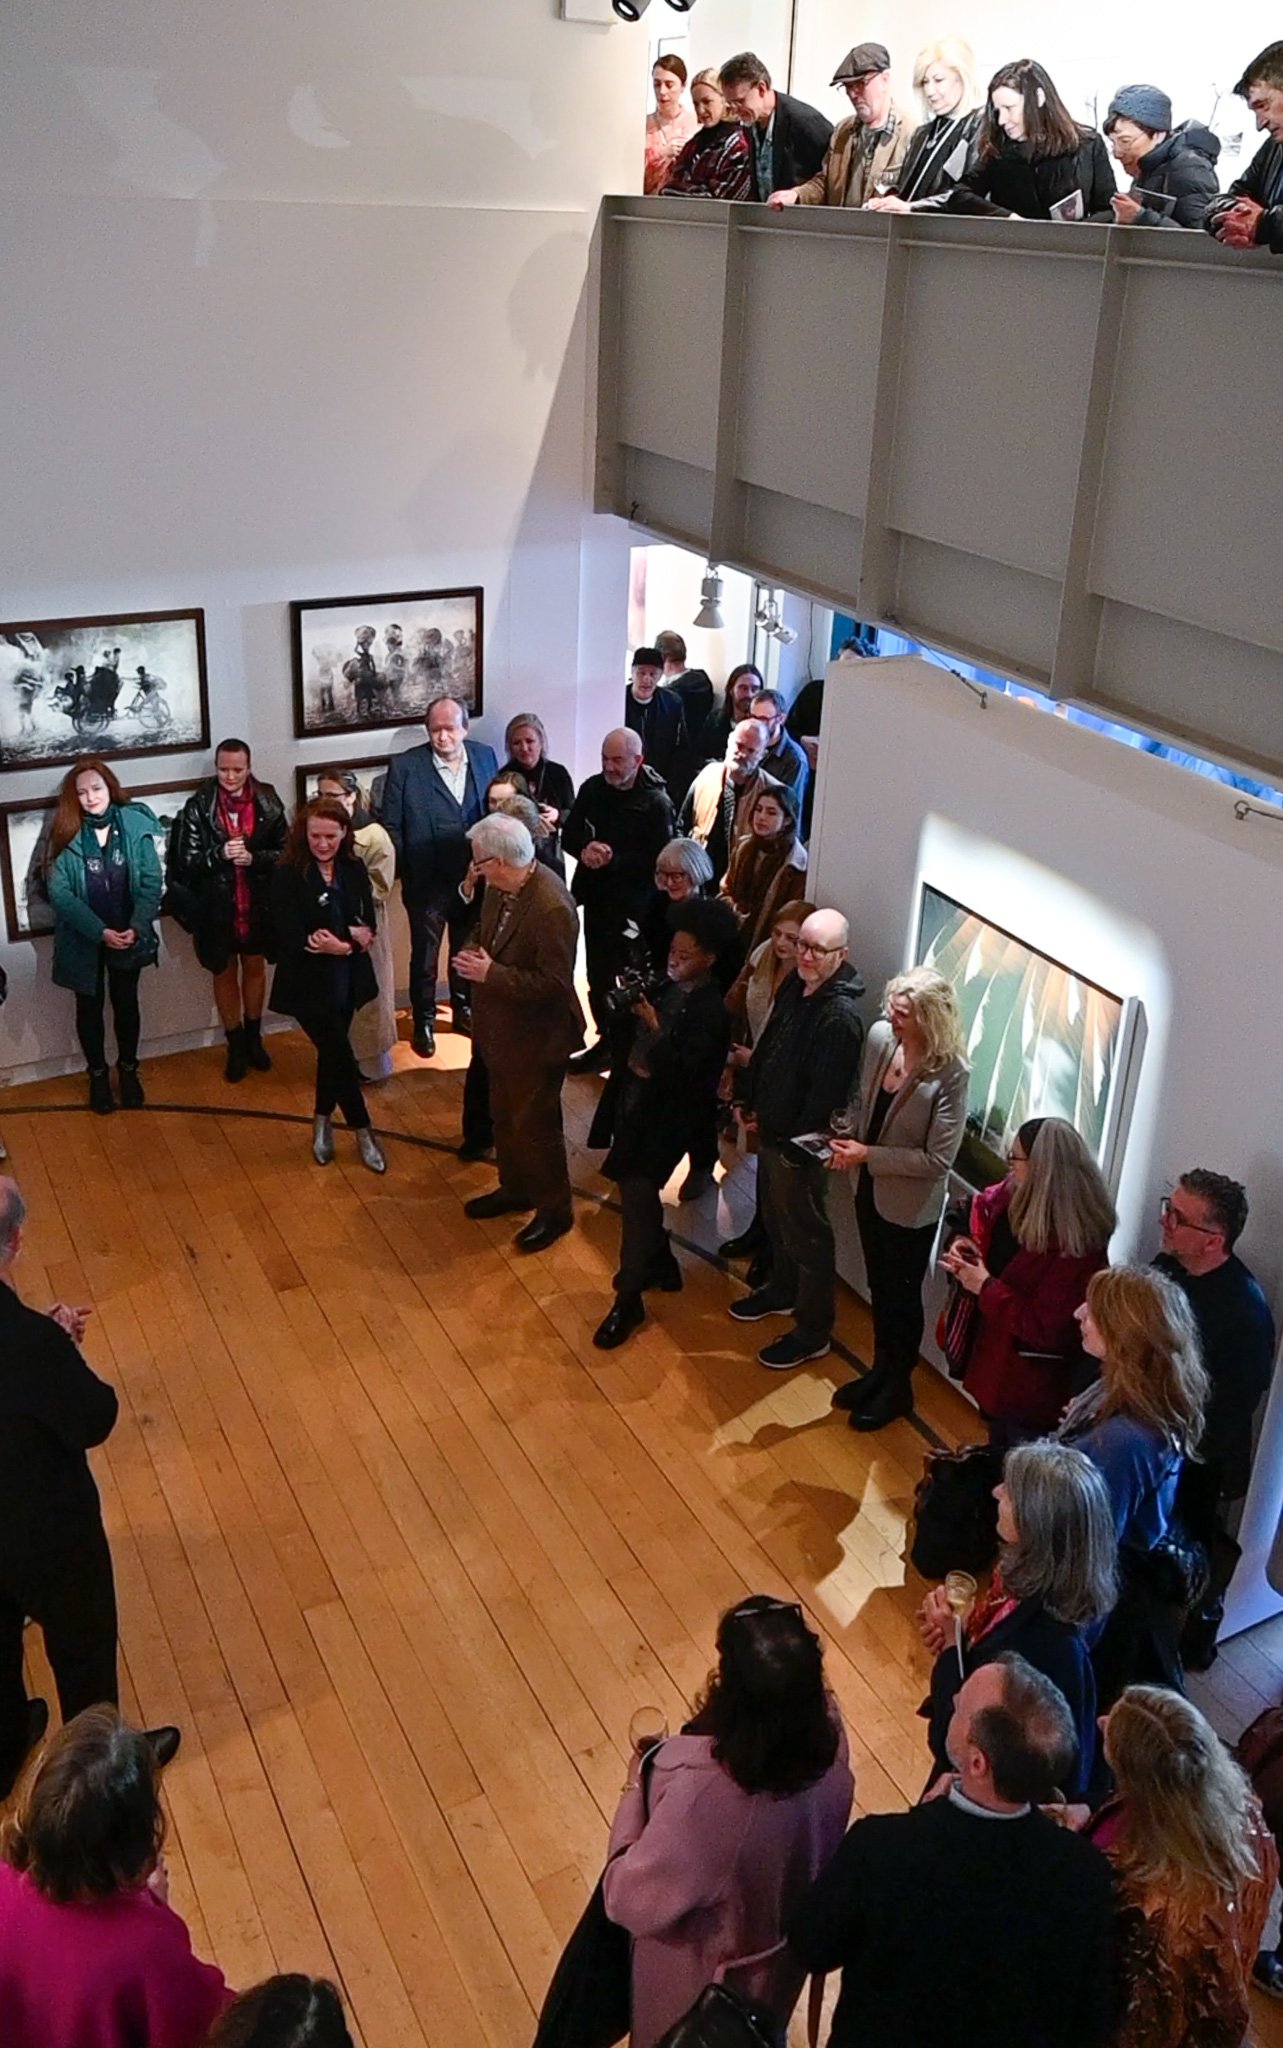 Prix Pictet: Fire opening at Photo Museum Ireland